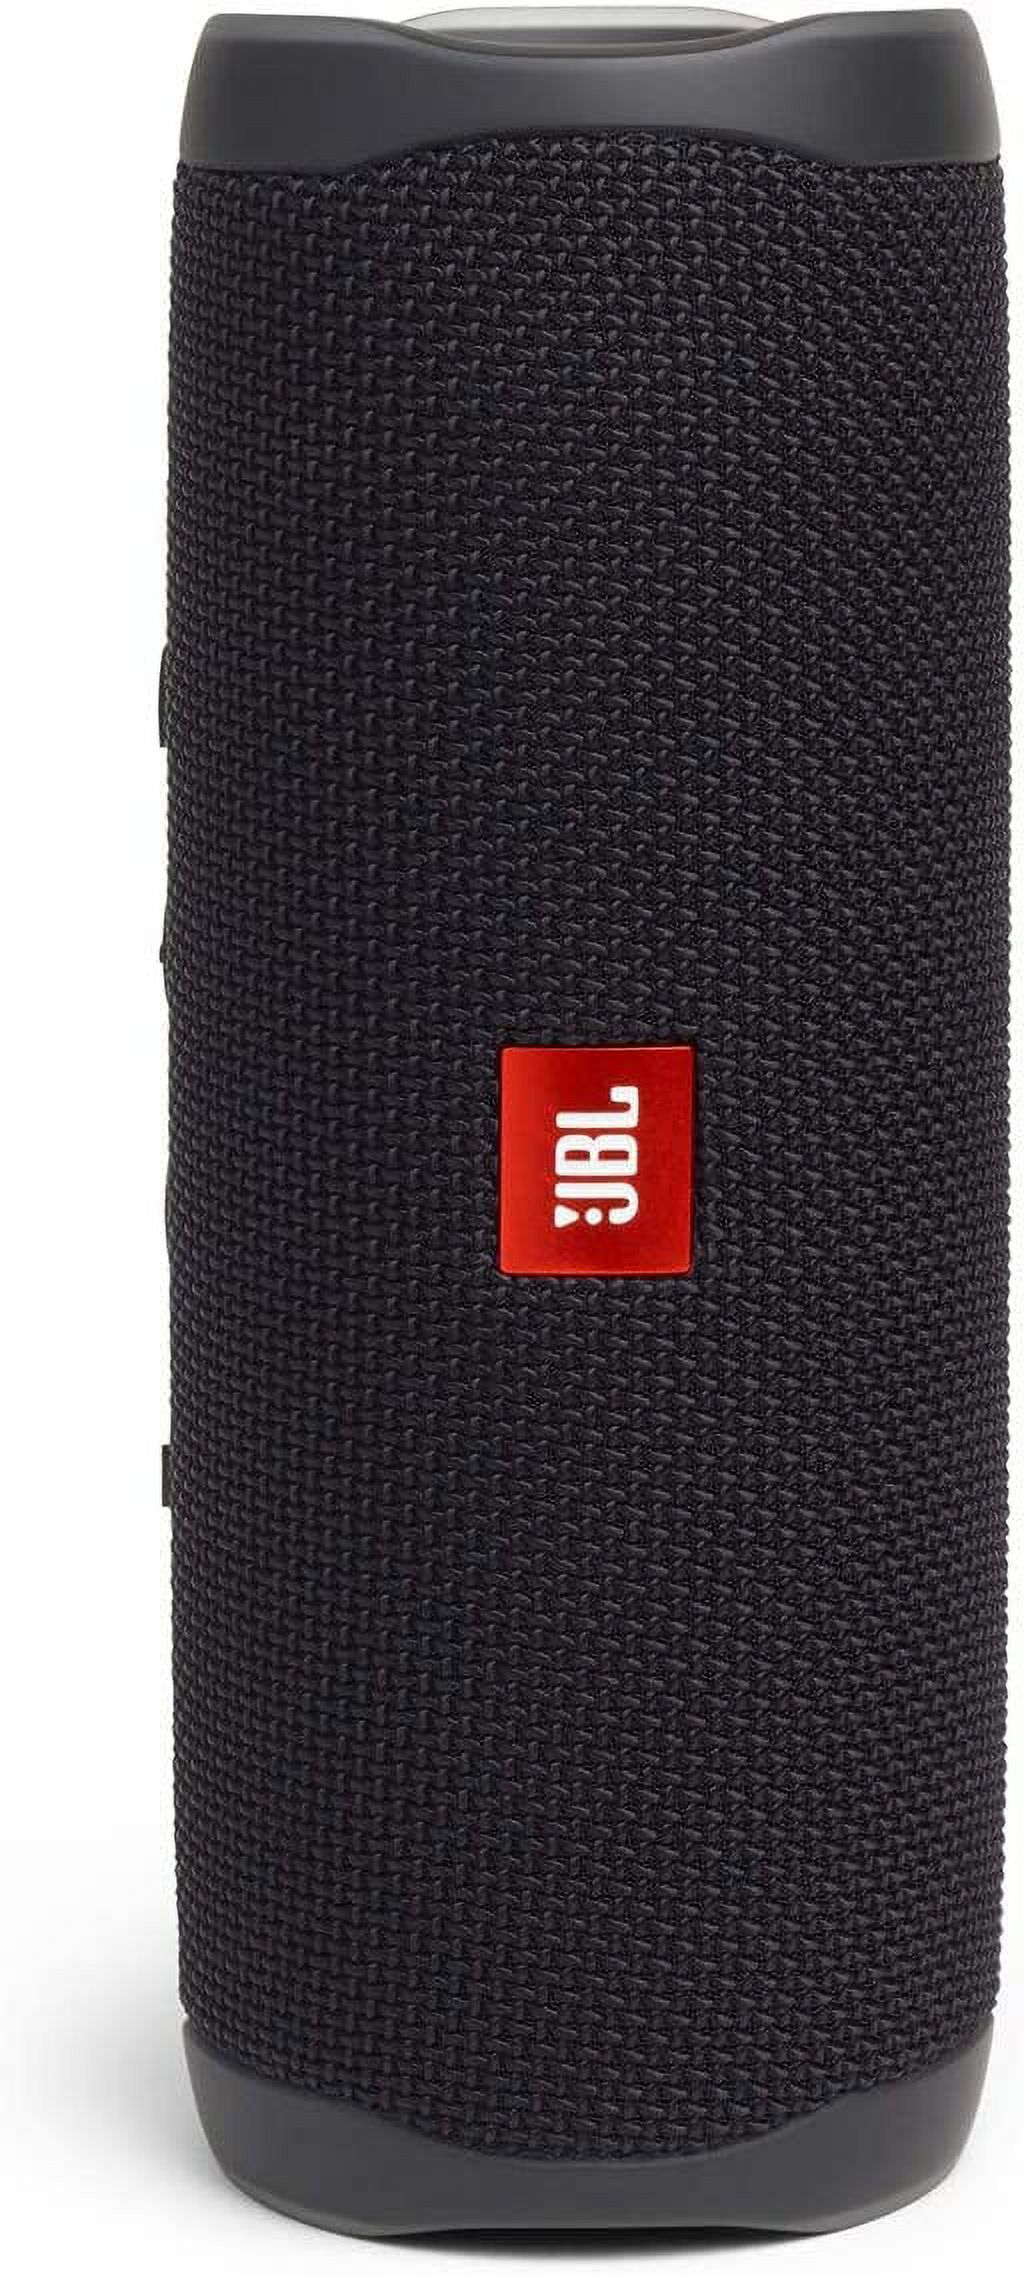 JBL Flip 5 Portable Waterproof Wireless Bluetooth Speaker - Black - image 1 of 5